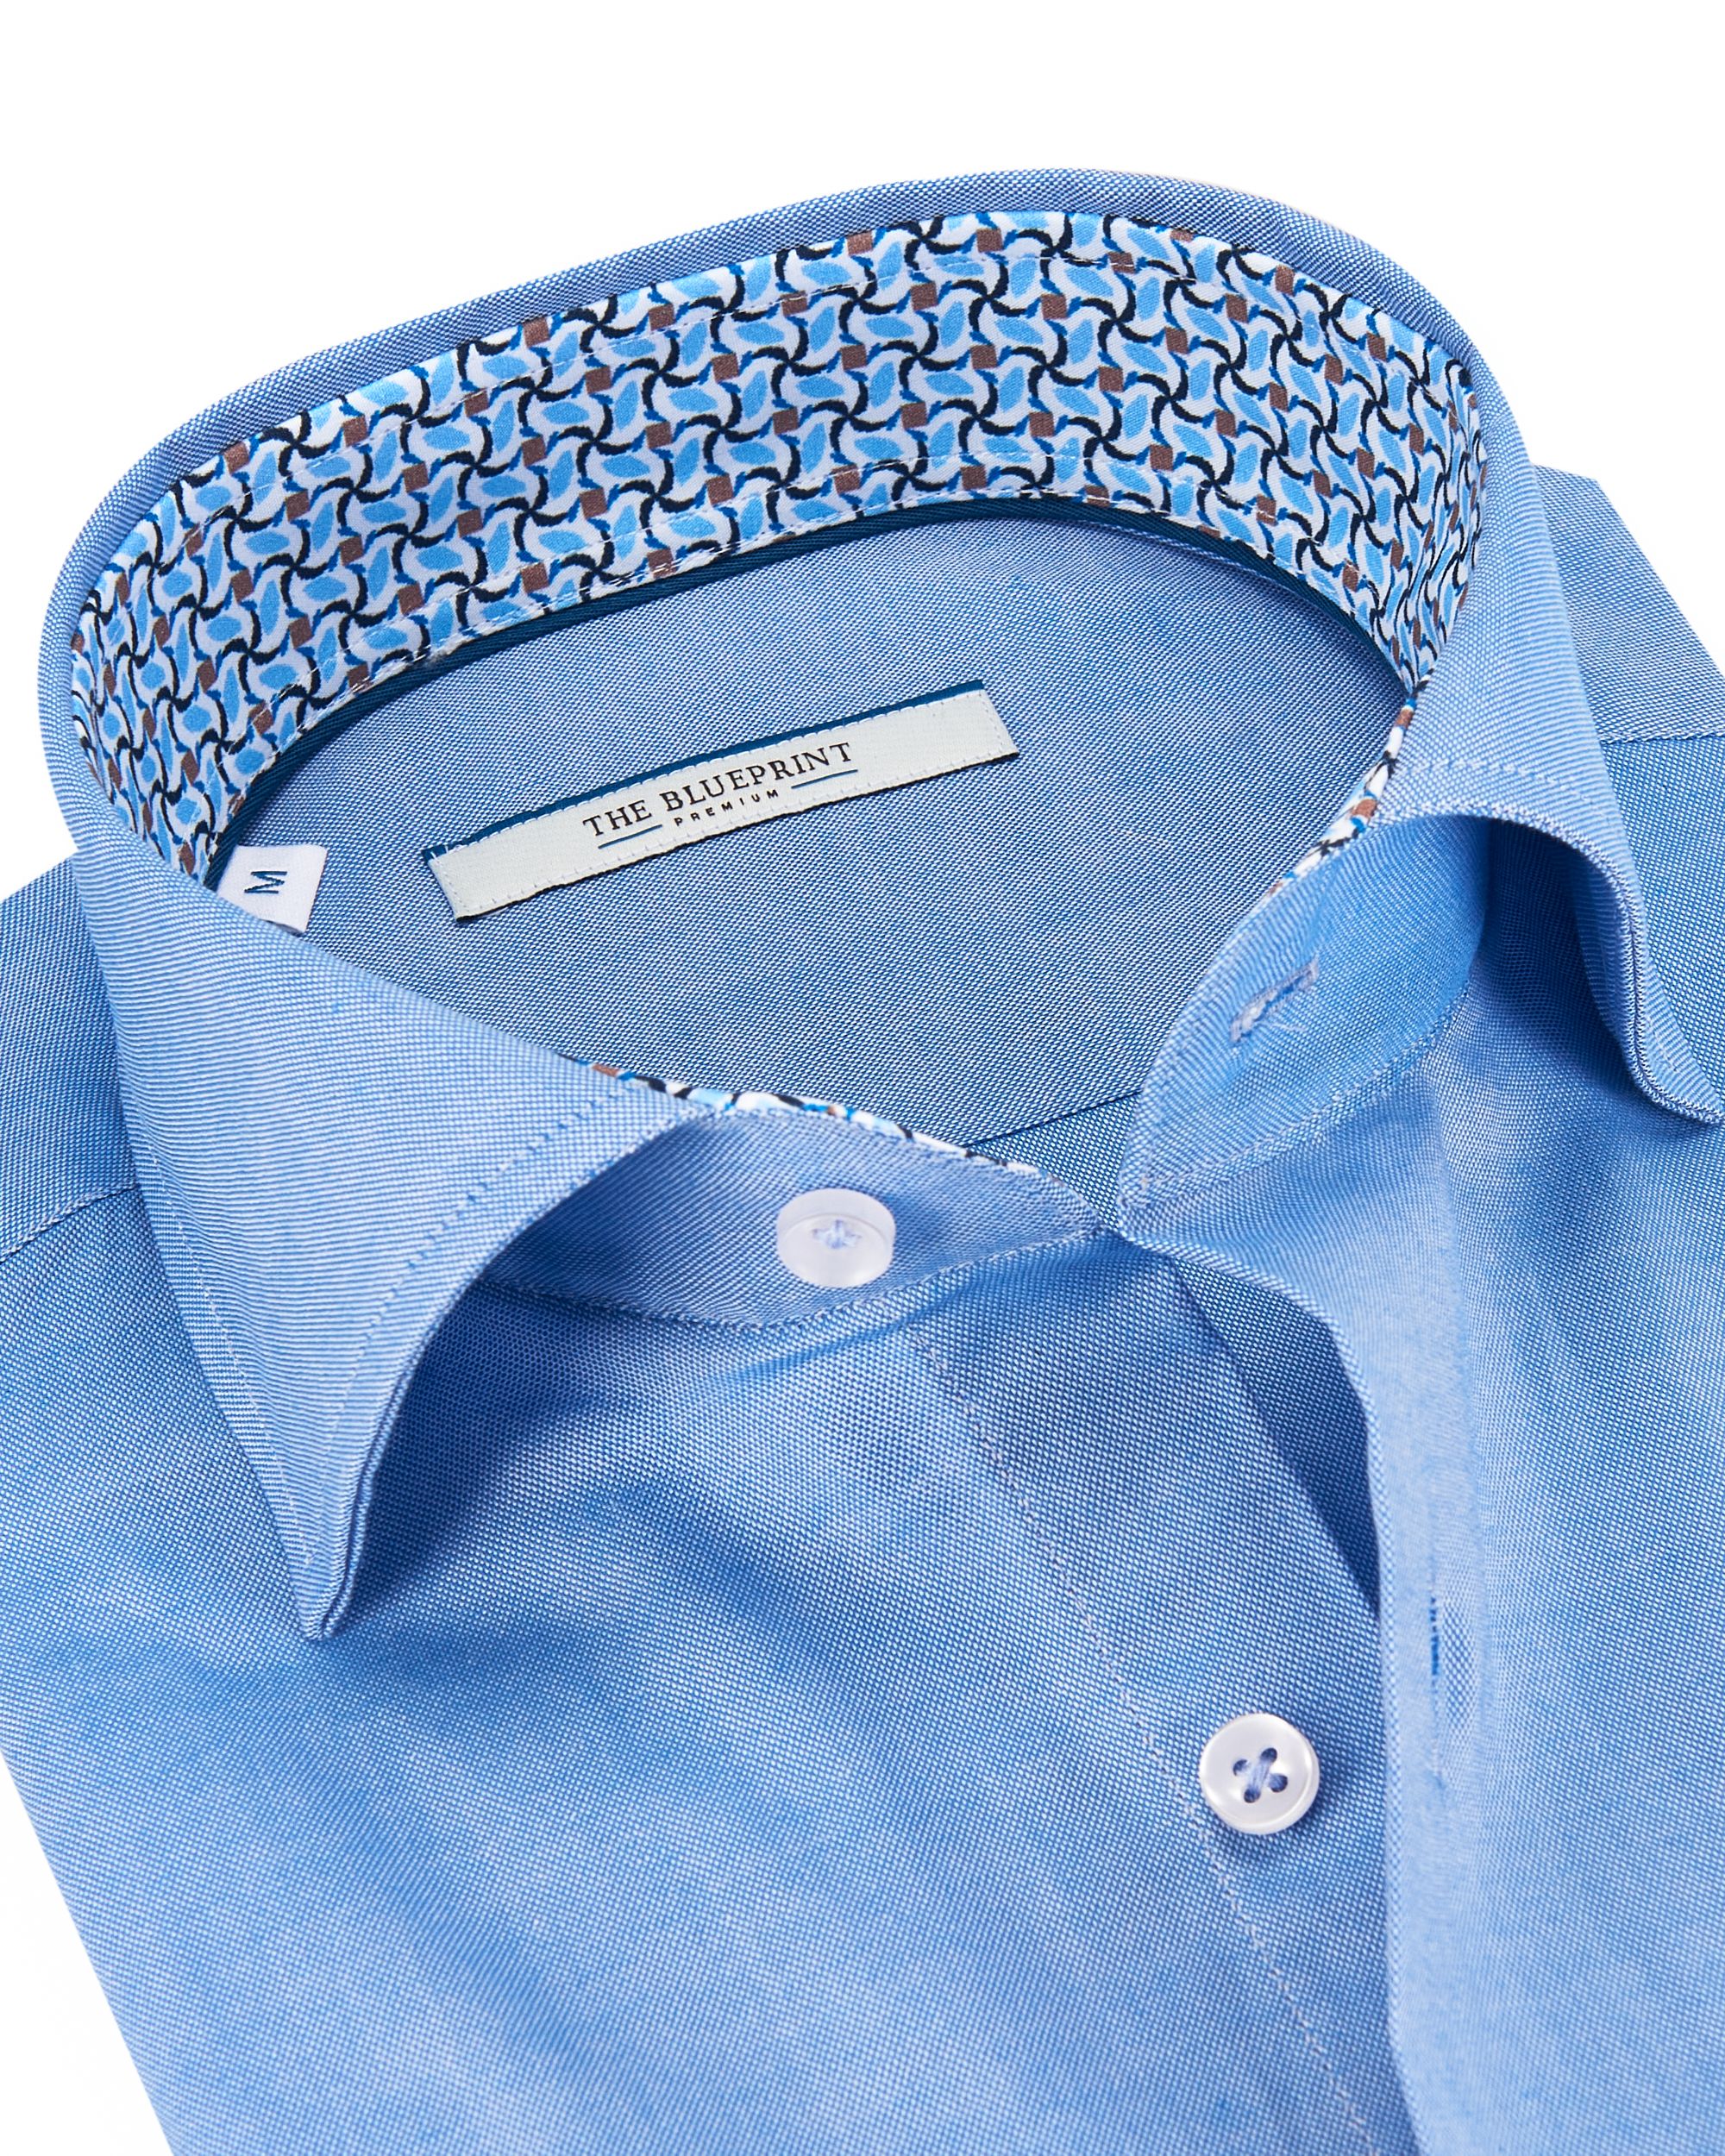 The BLUEPRINT Premium Trendy overhemd LM Blauw uni 084498-001-L